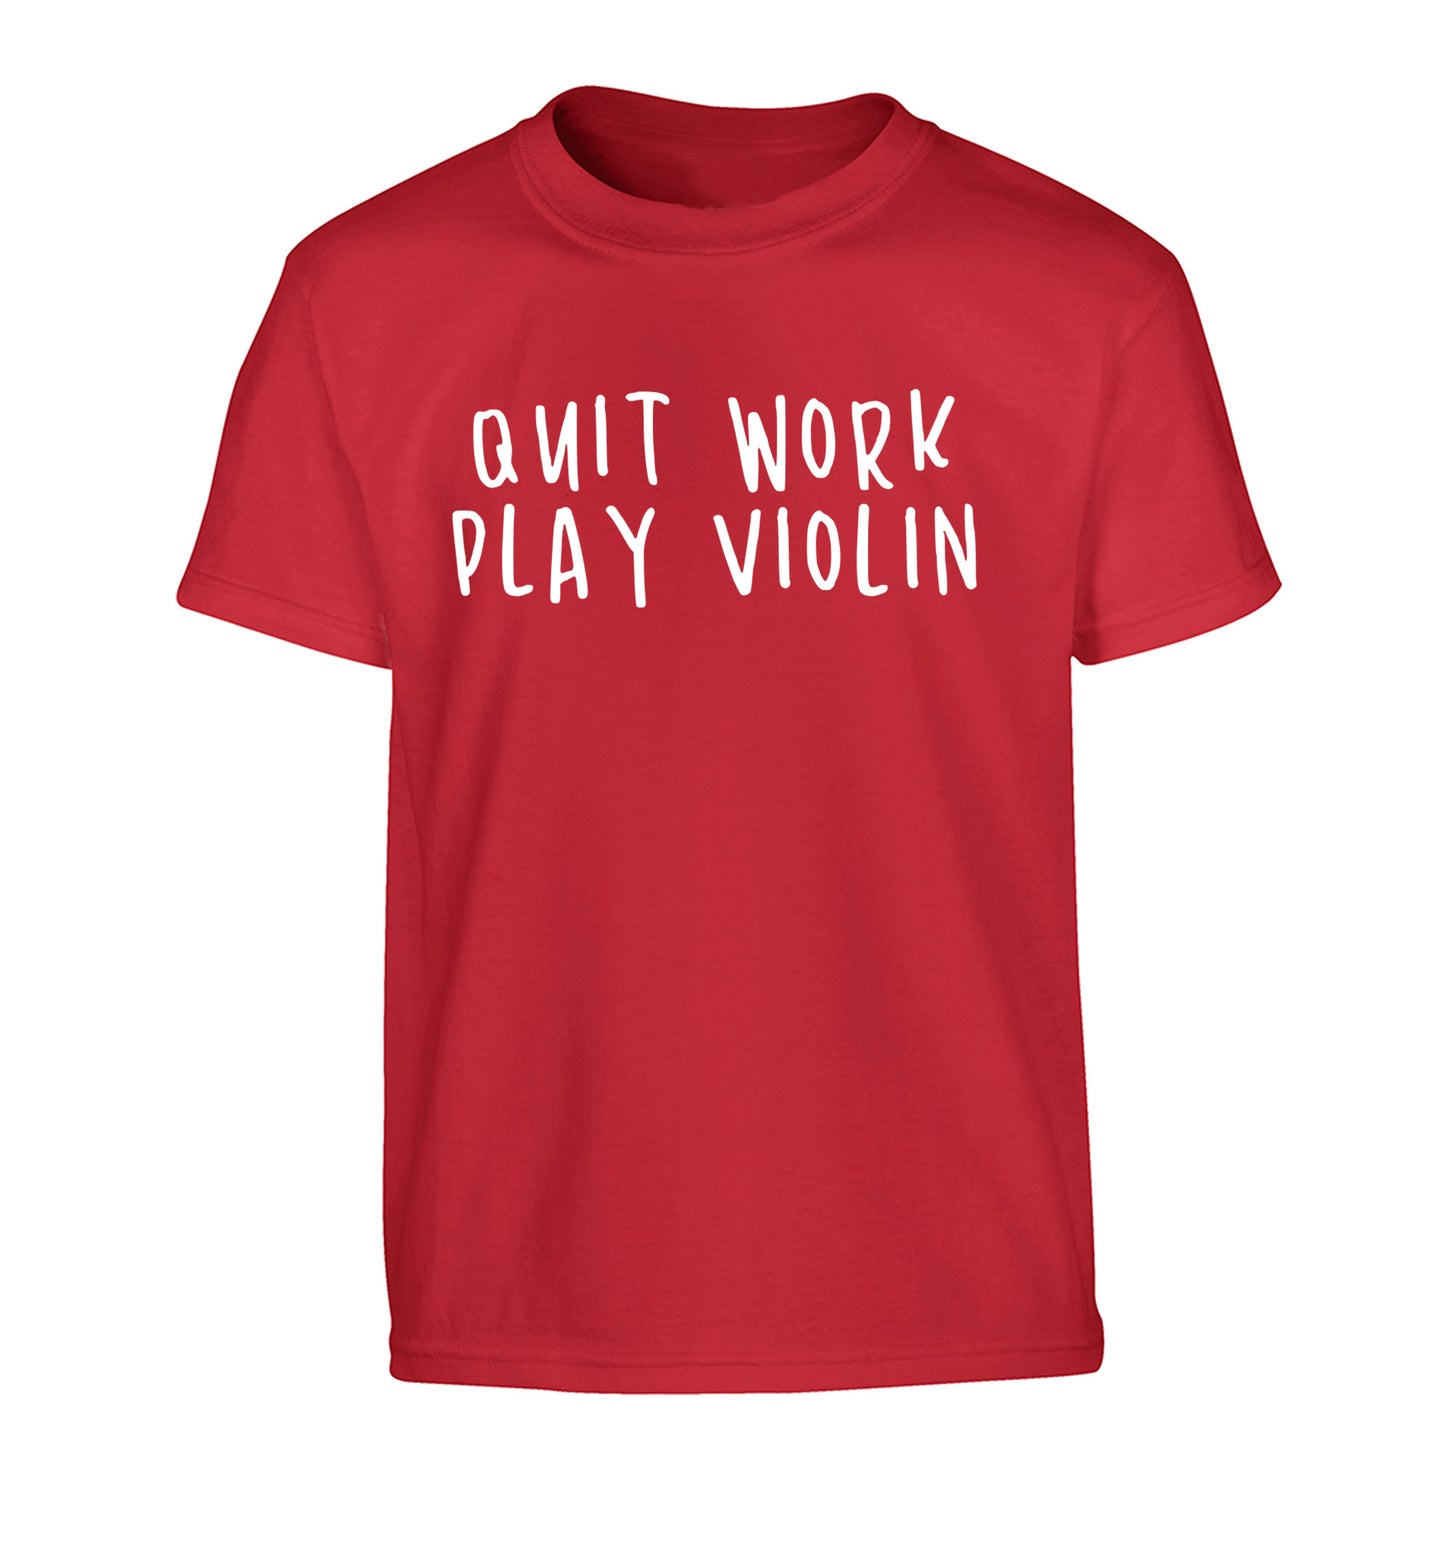 Quit work play violin Children's red Tshirt 12-13 Years